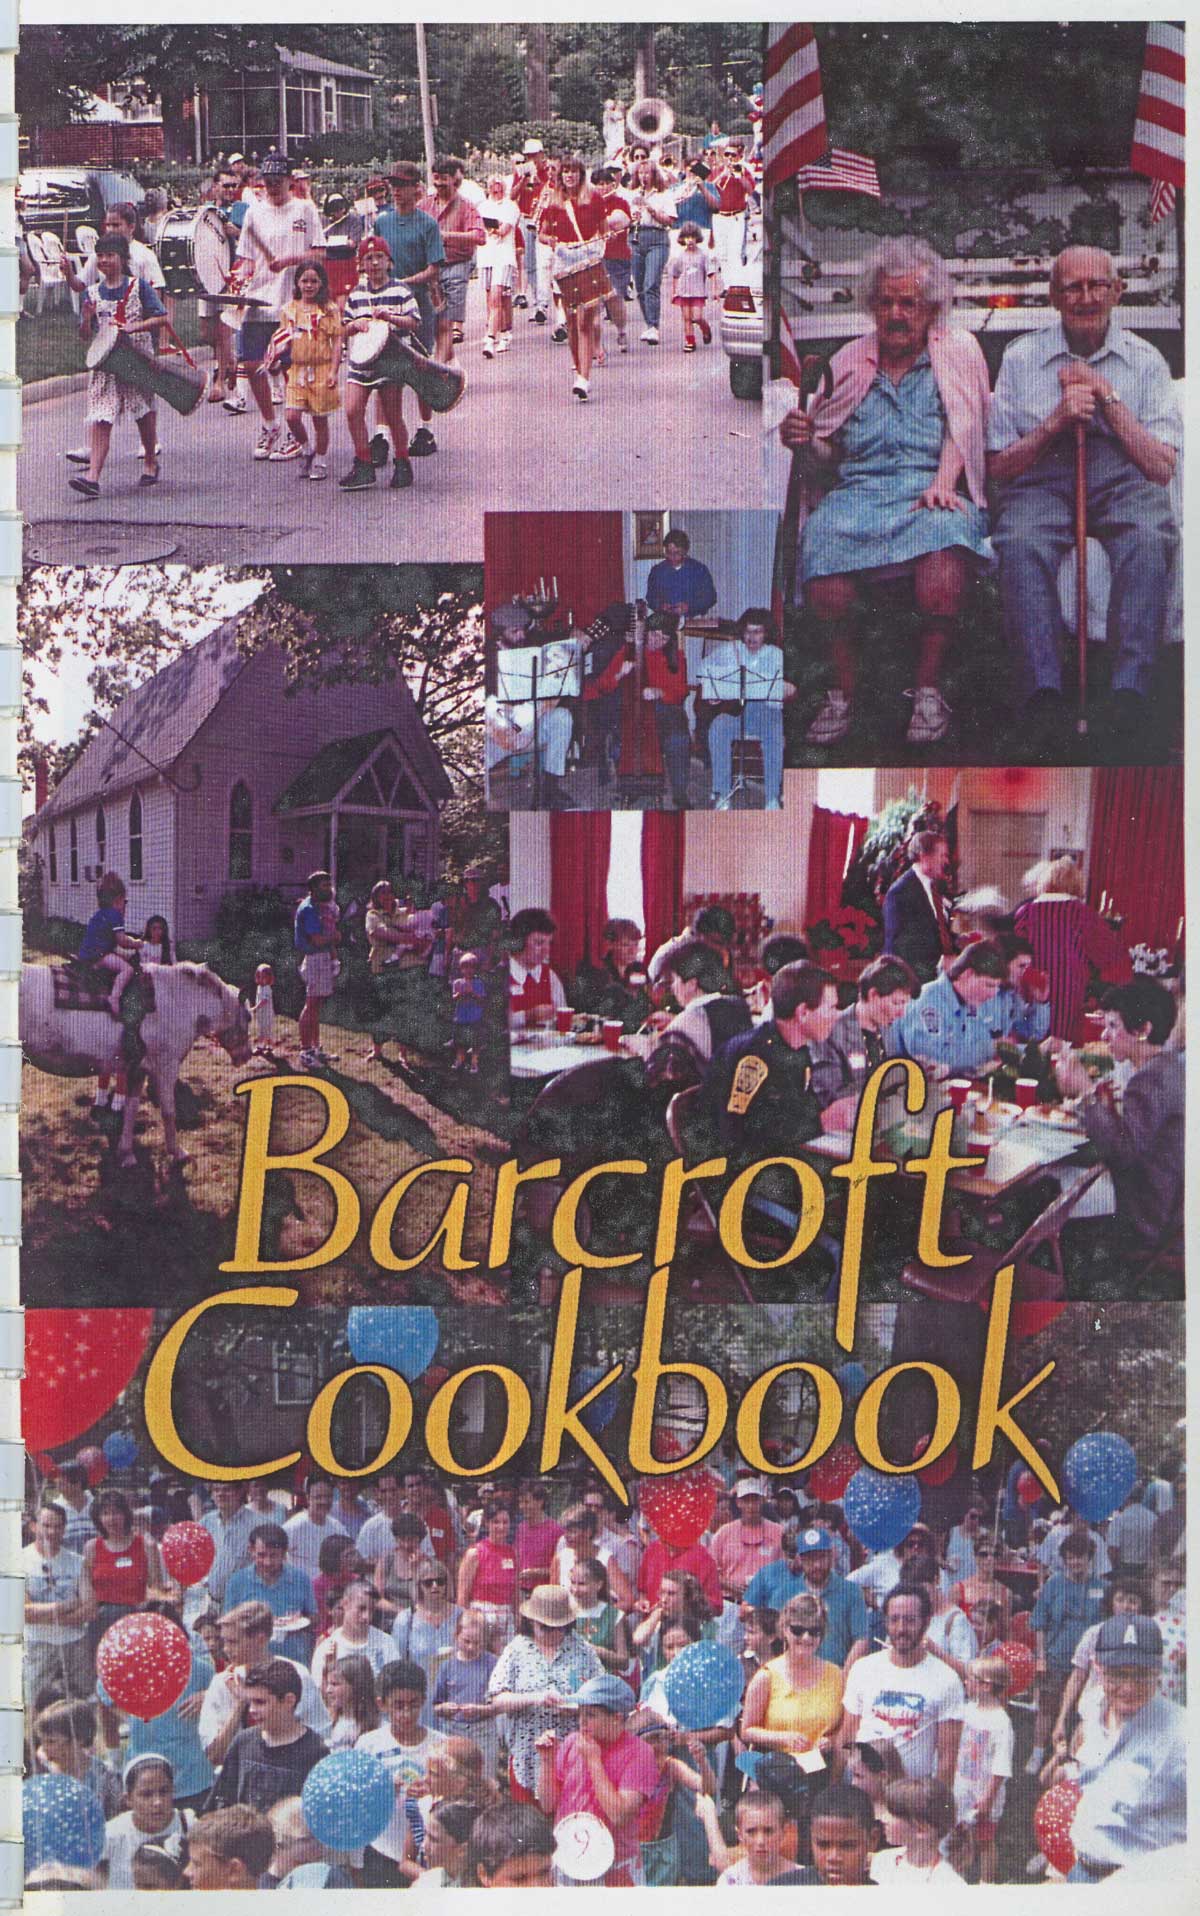 Barcroft Cookbook